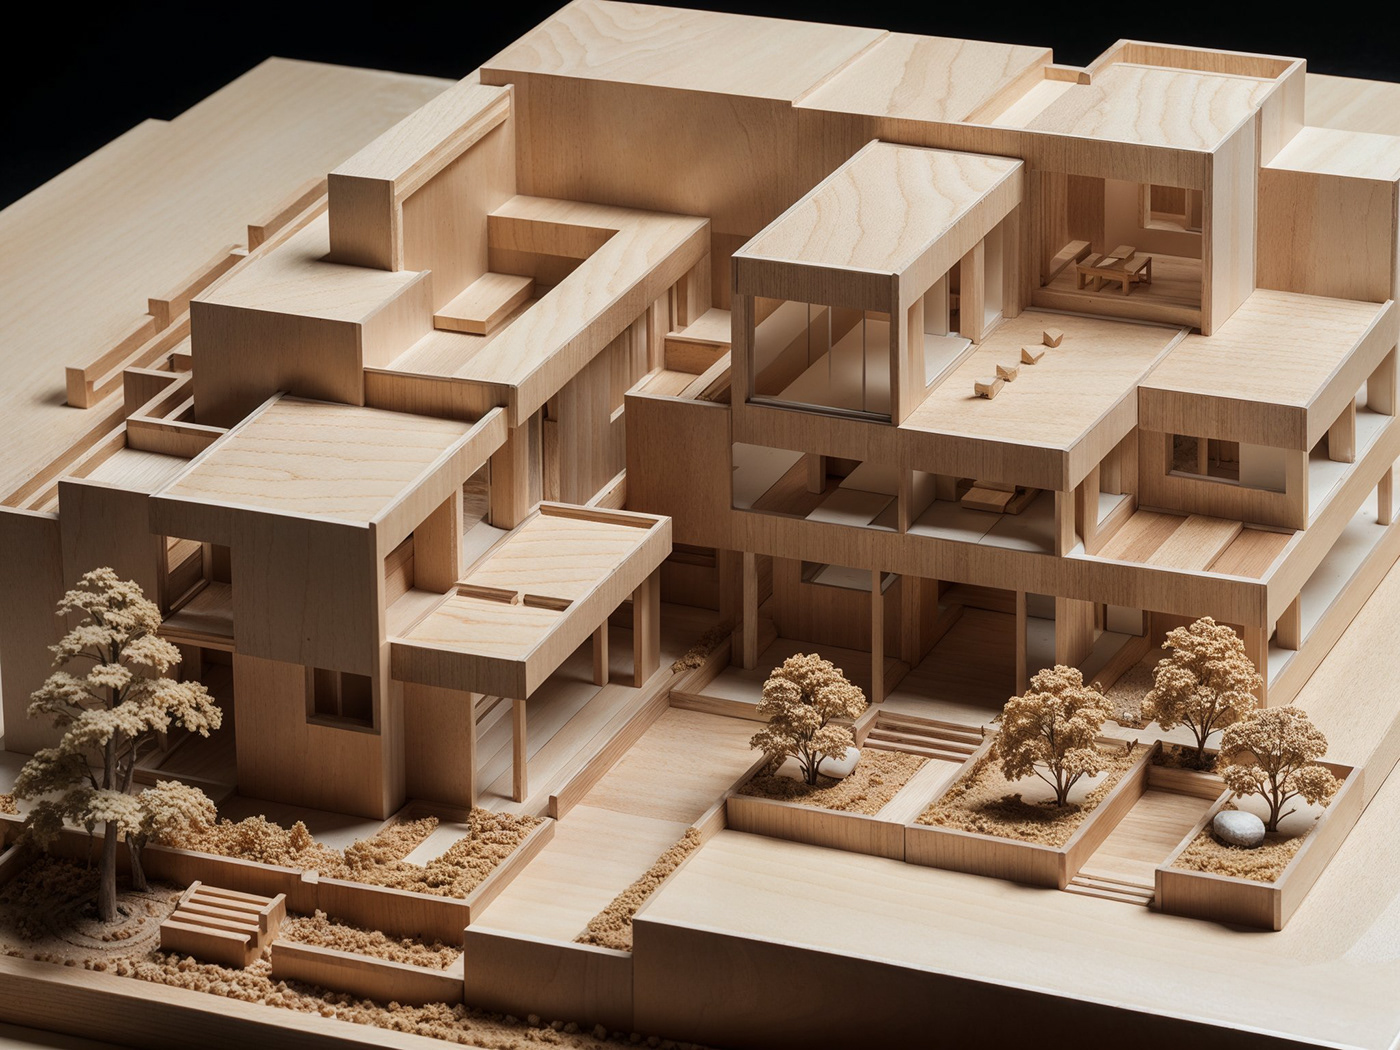 architecture architectural design maquette 3d modeling visualization Render